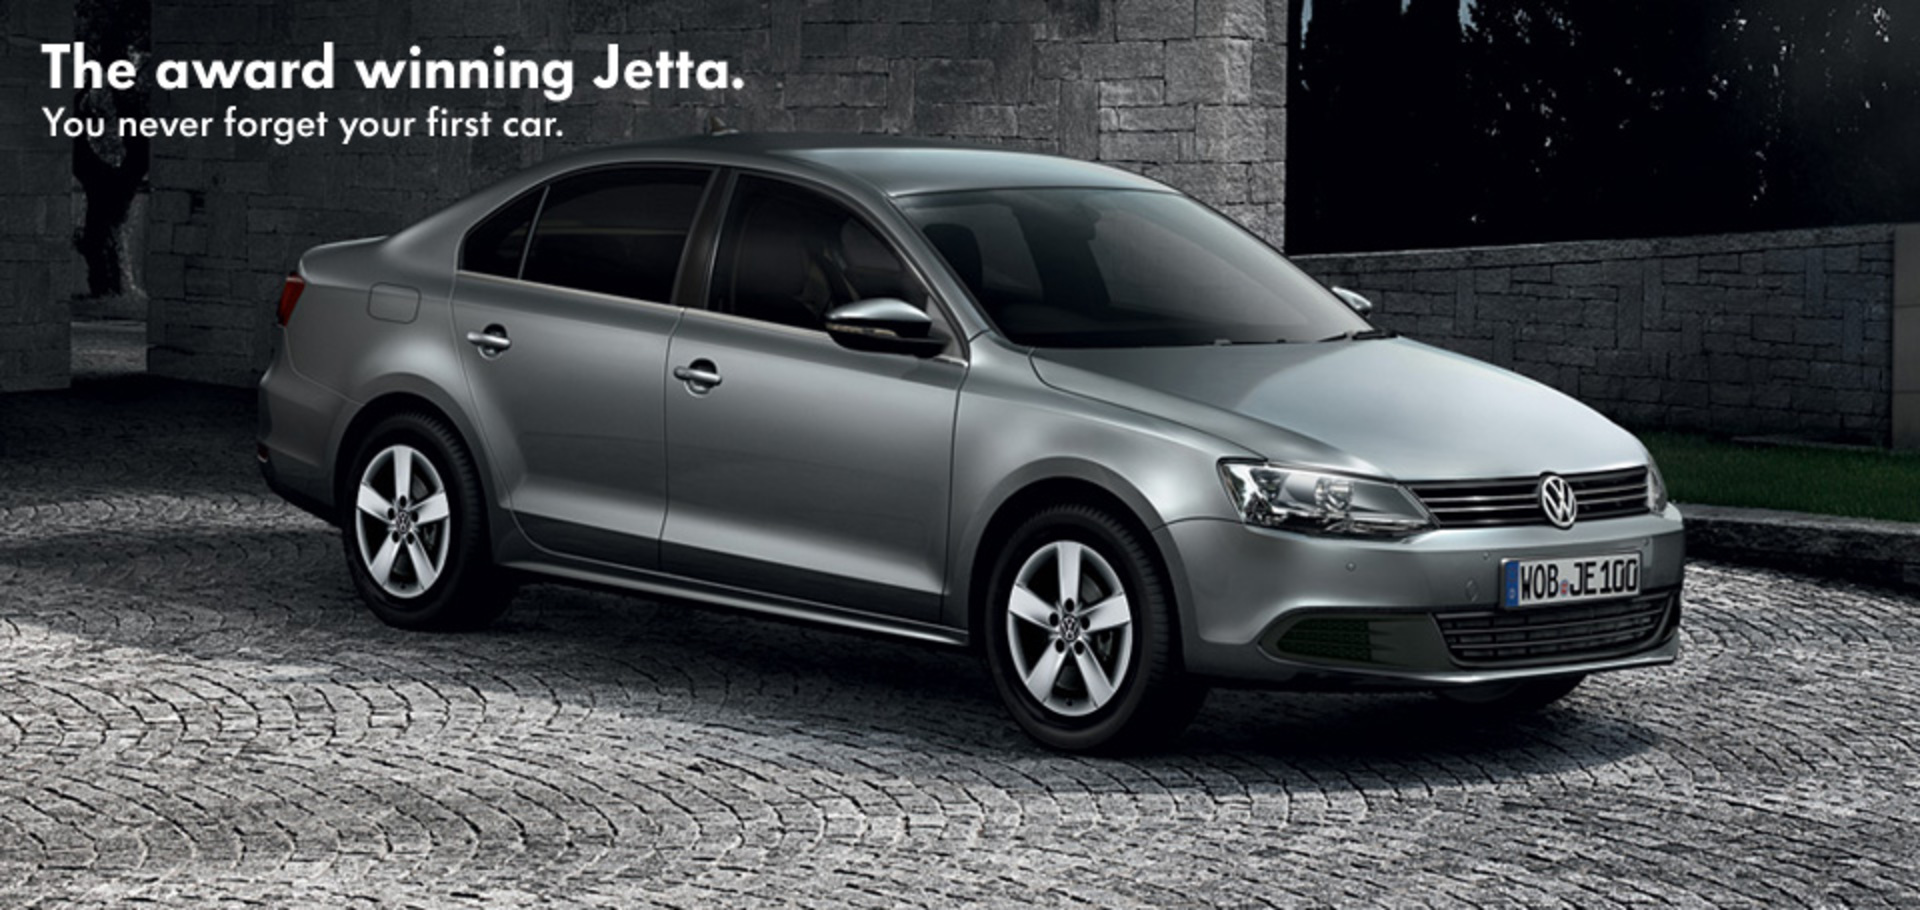 Jetta < Models < Volkswagen Australia